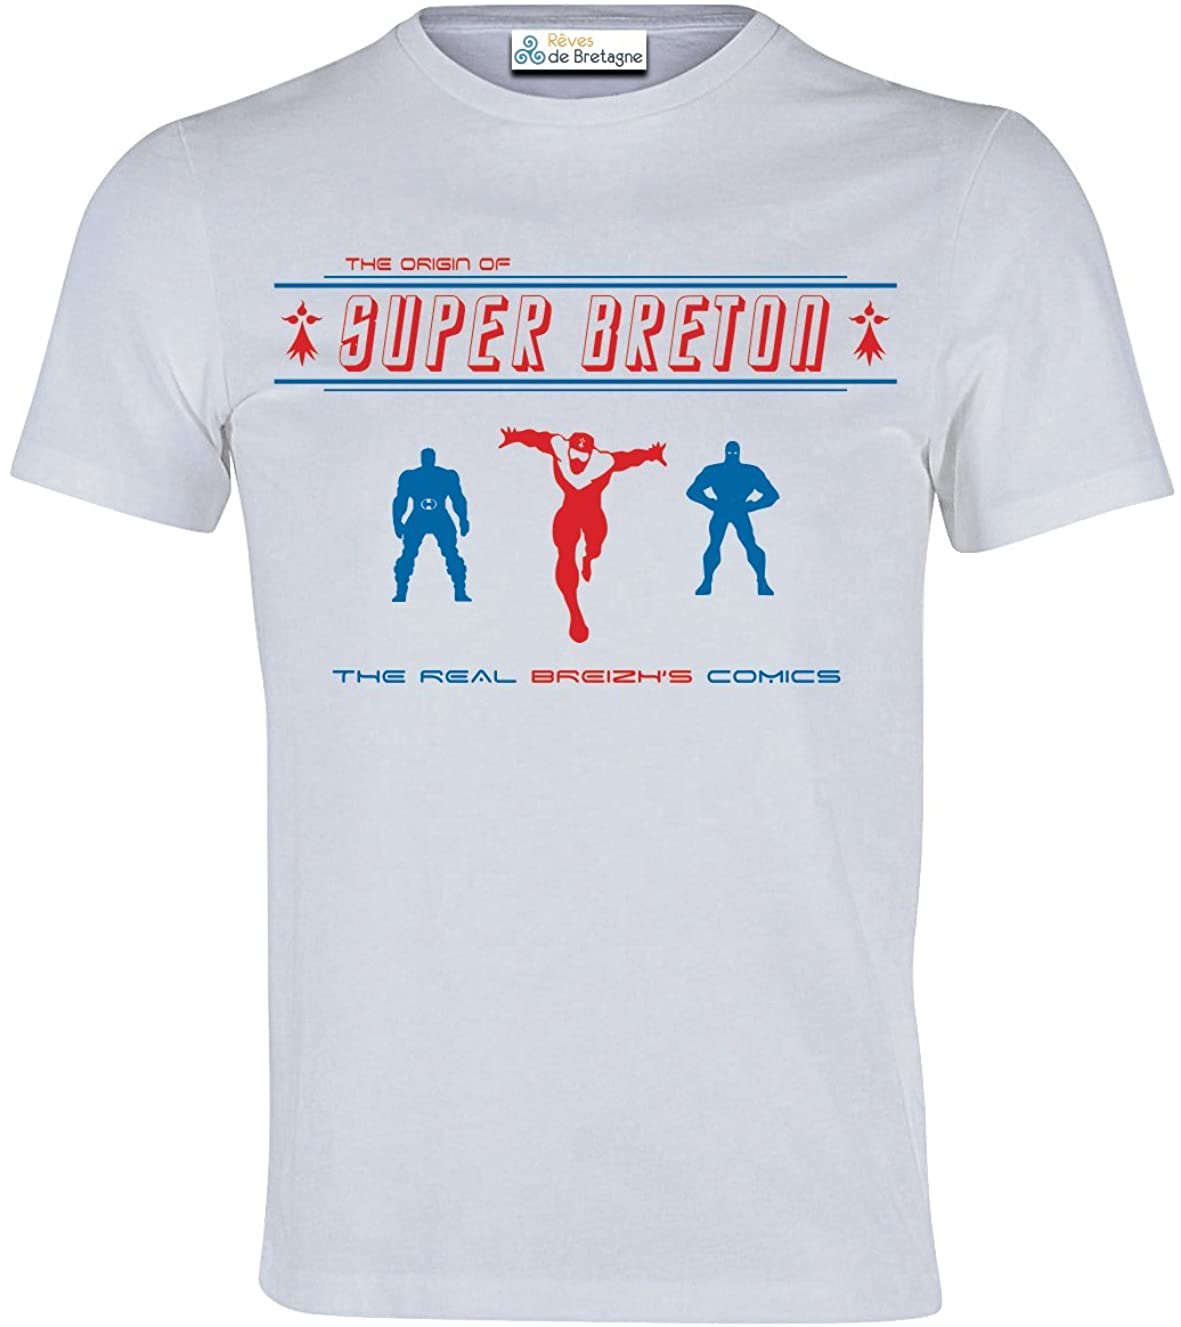 Tee-shirt Breton Super Breton The Real Breizh's Comics